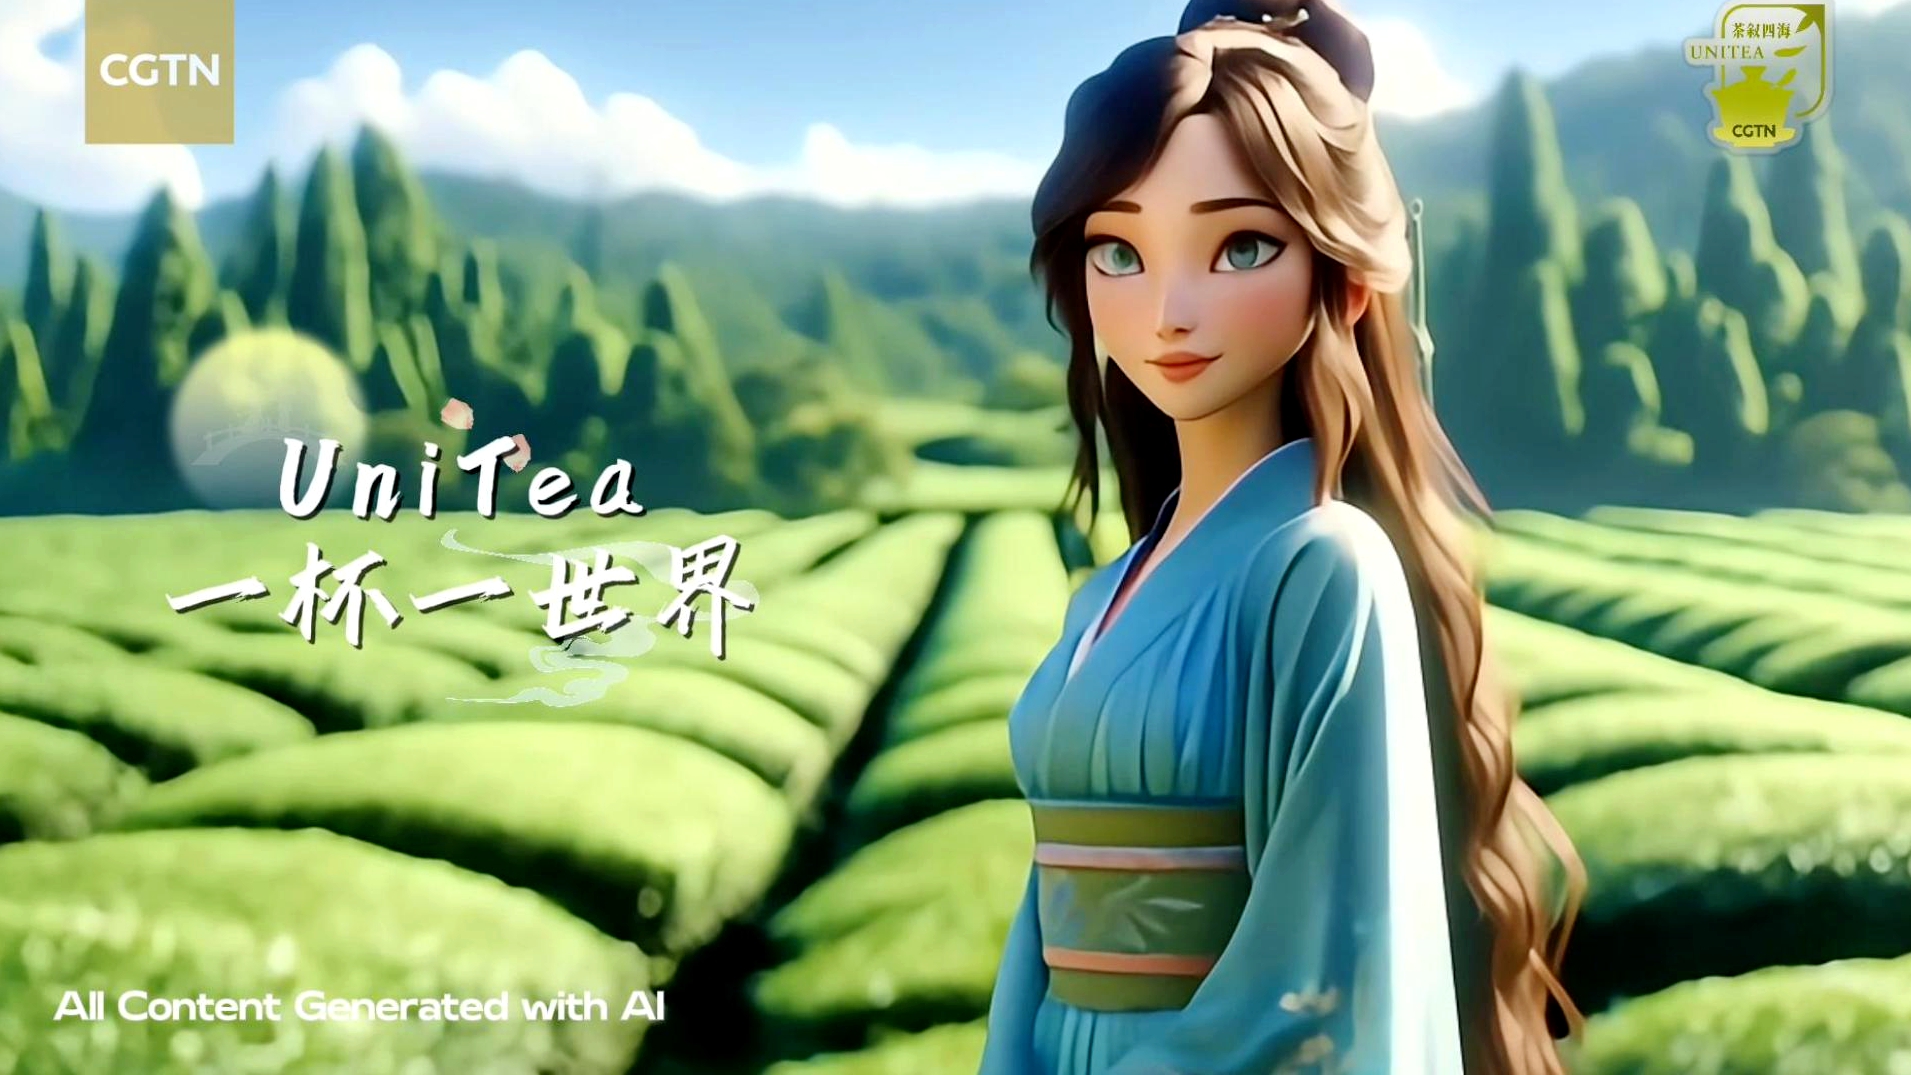 AI-generated music video marks International Tea Day on CGTN's UniTea